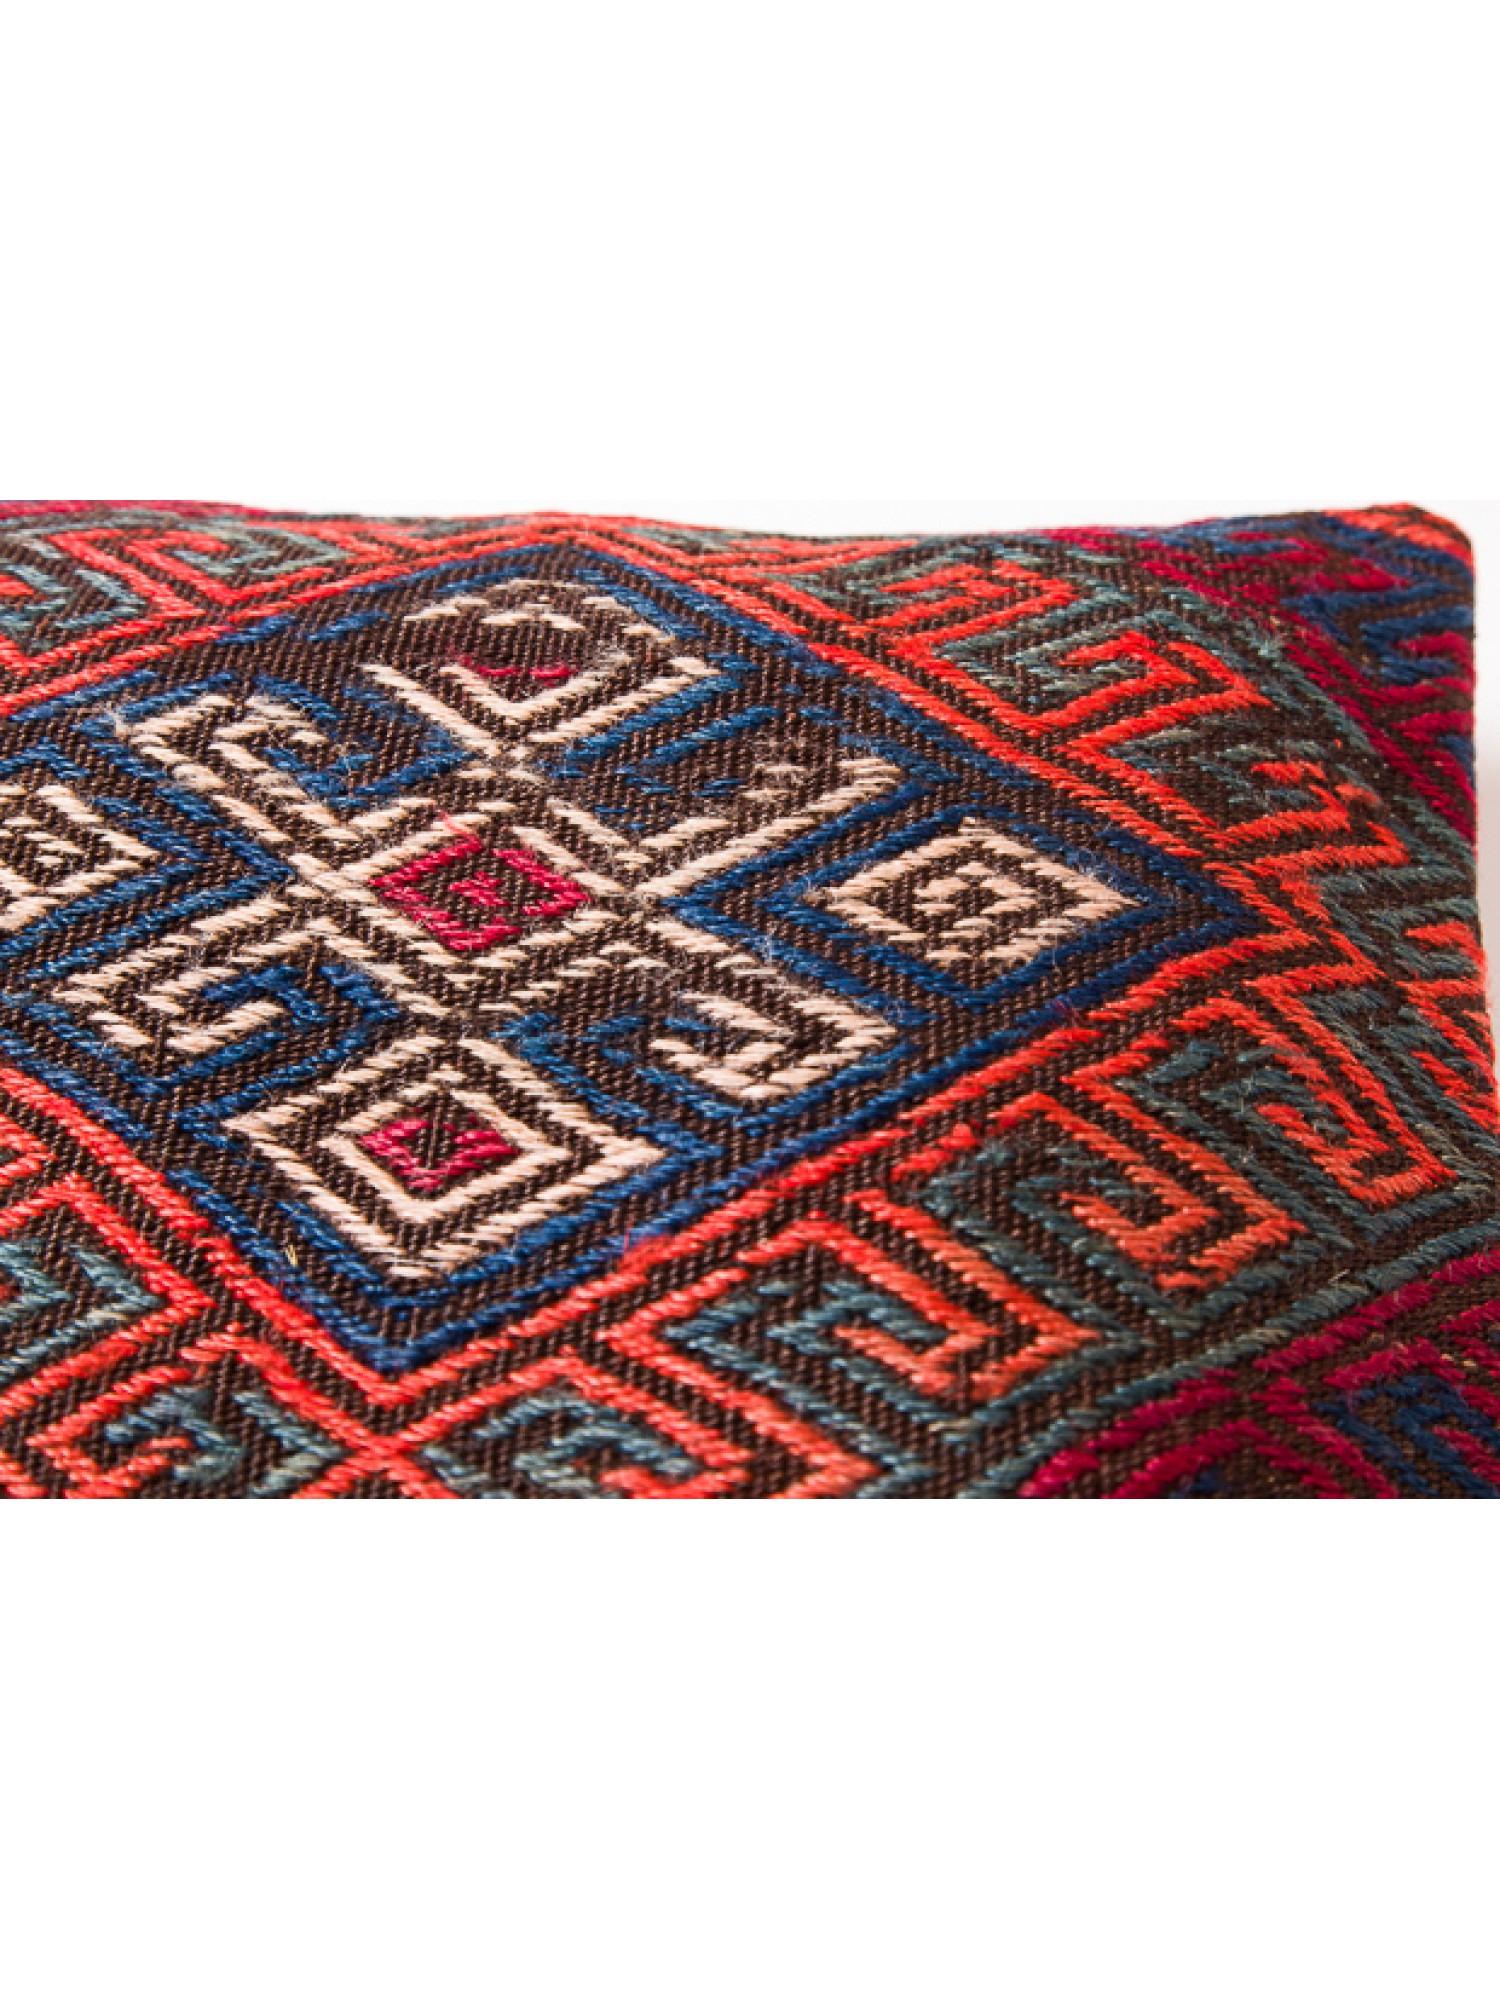 Hand-Woven Vintage & Old Kilim Cushion Cover, Anatolian Yastik Turkish Modern Pillow KC1796 For Sale